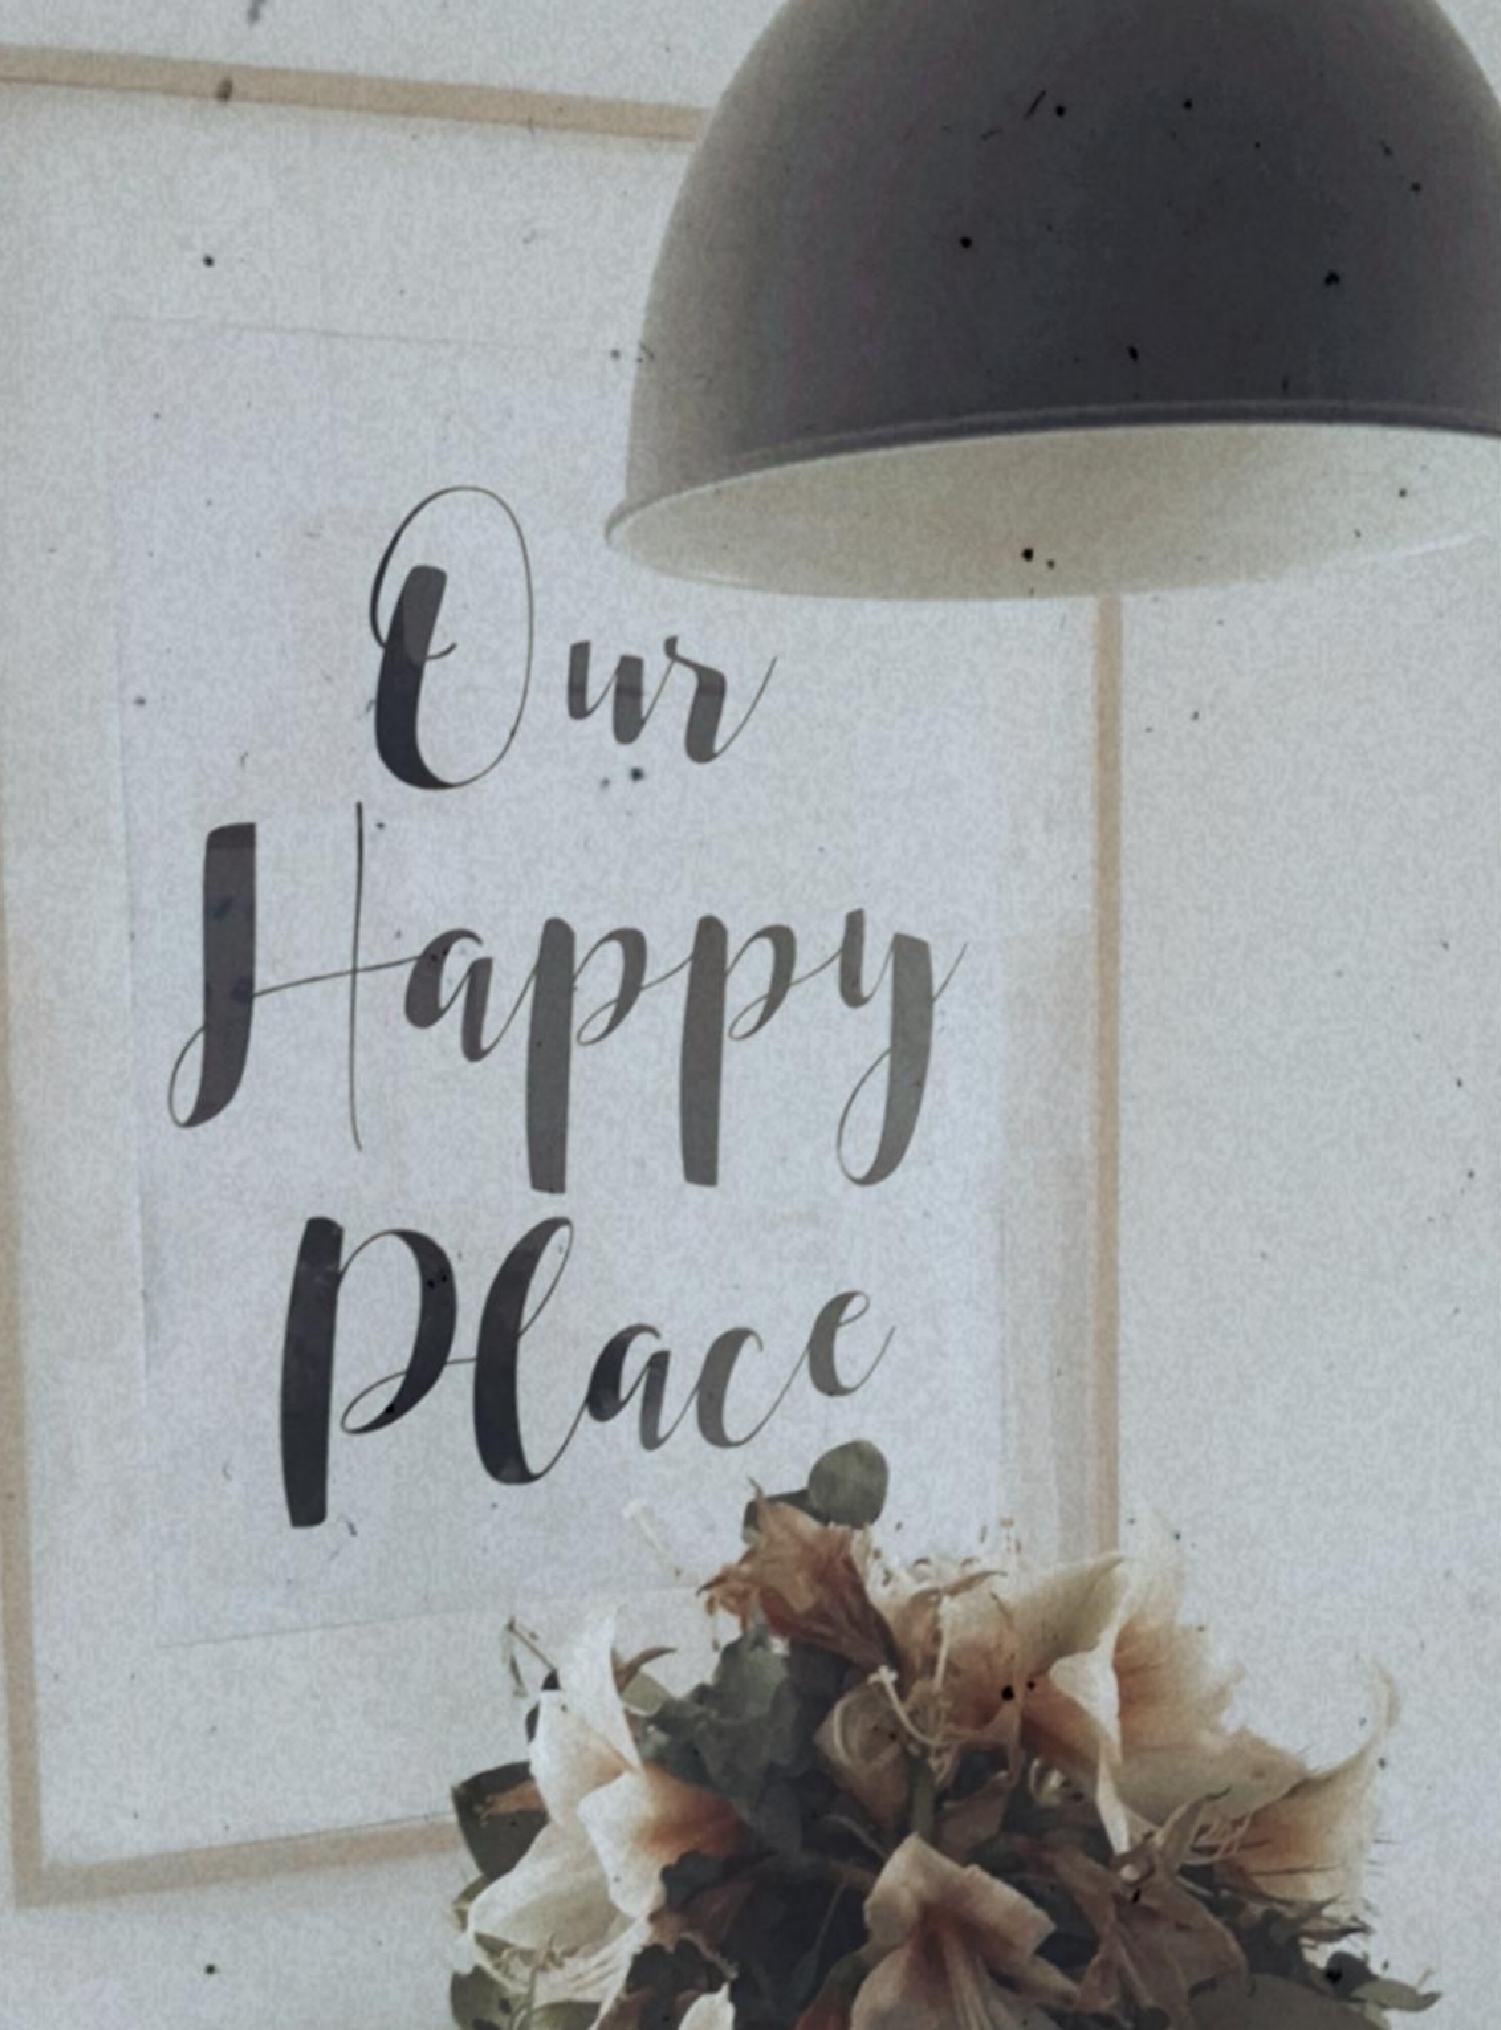 Our happy place🌙
#couchliebt#happyplace#deko#wand#kitcheninspo 